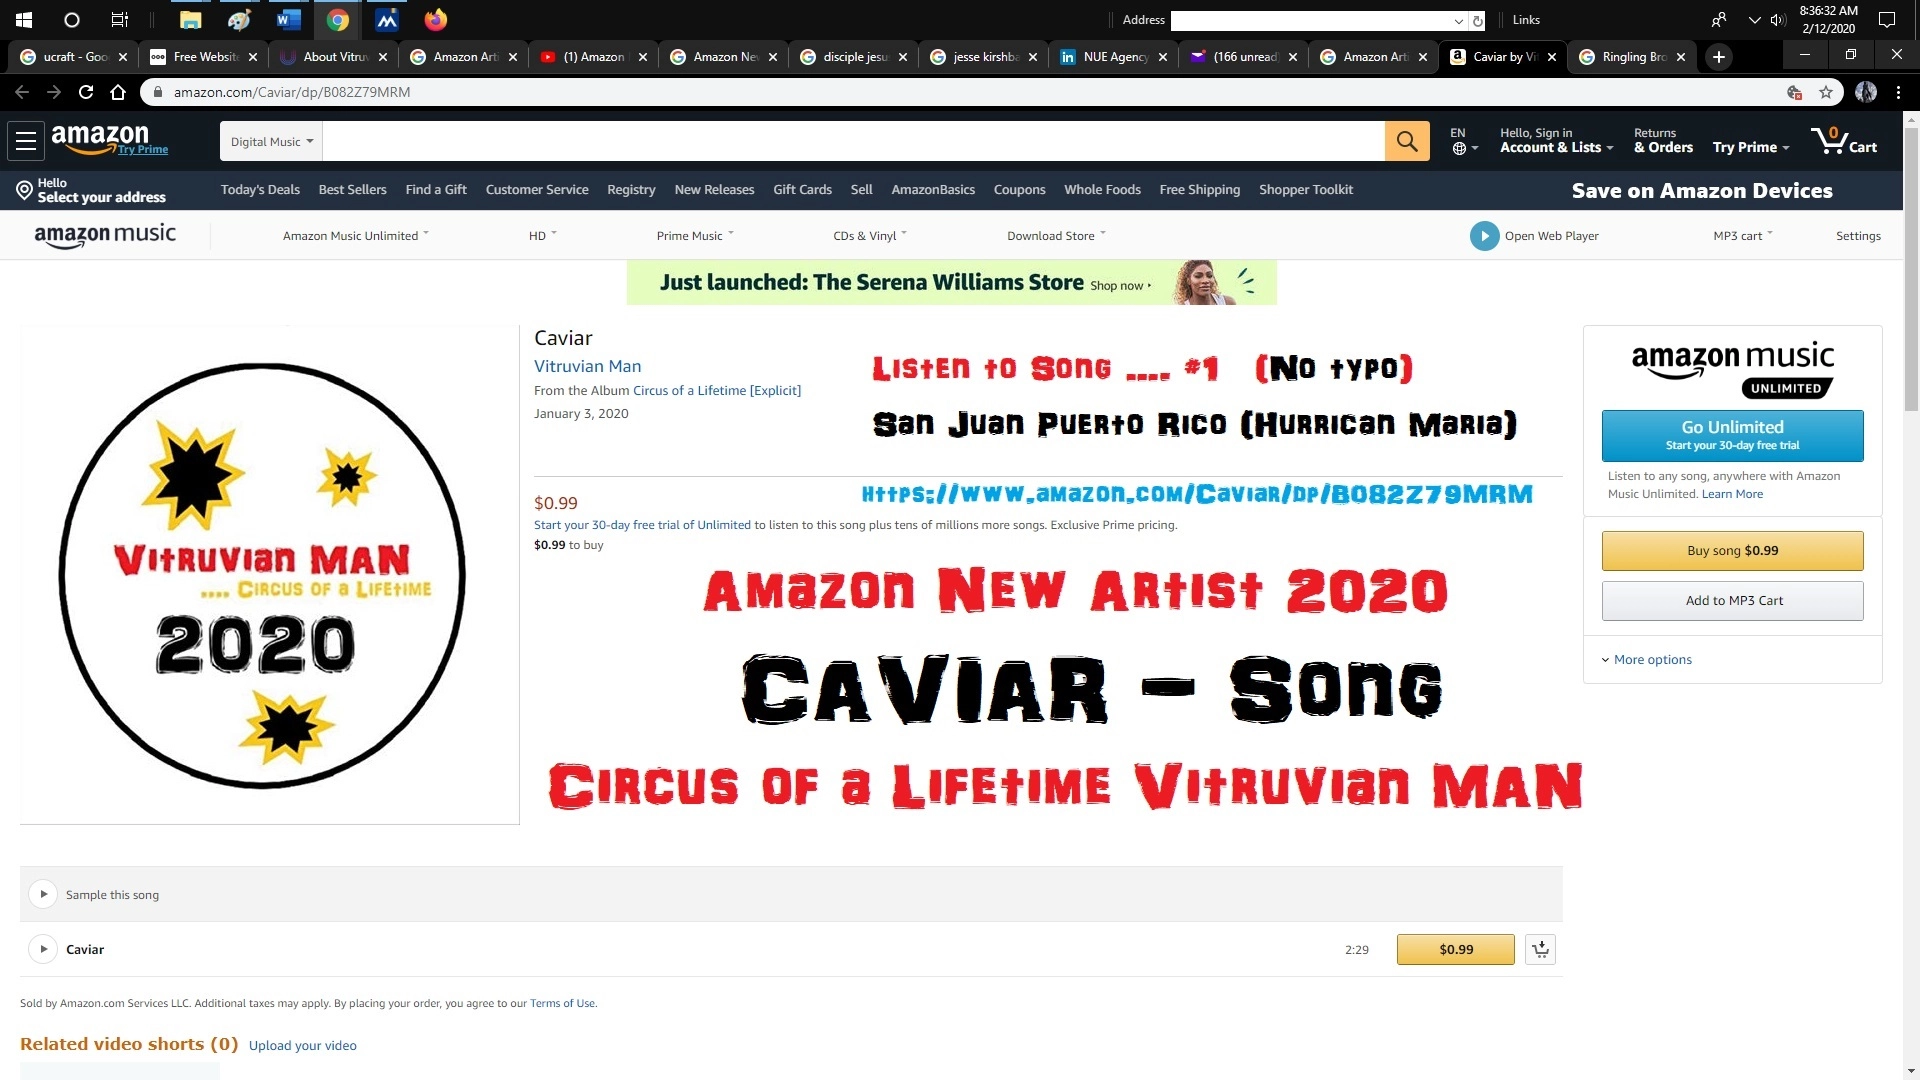 r336-amazon-new-artist-2020-caviar-vitruvian-man-15815952703903.jpg